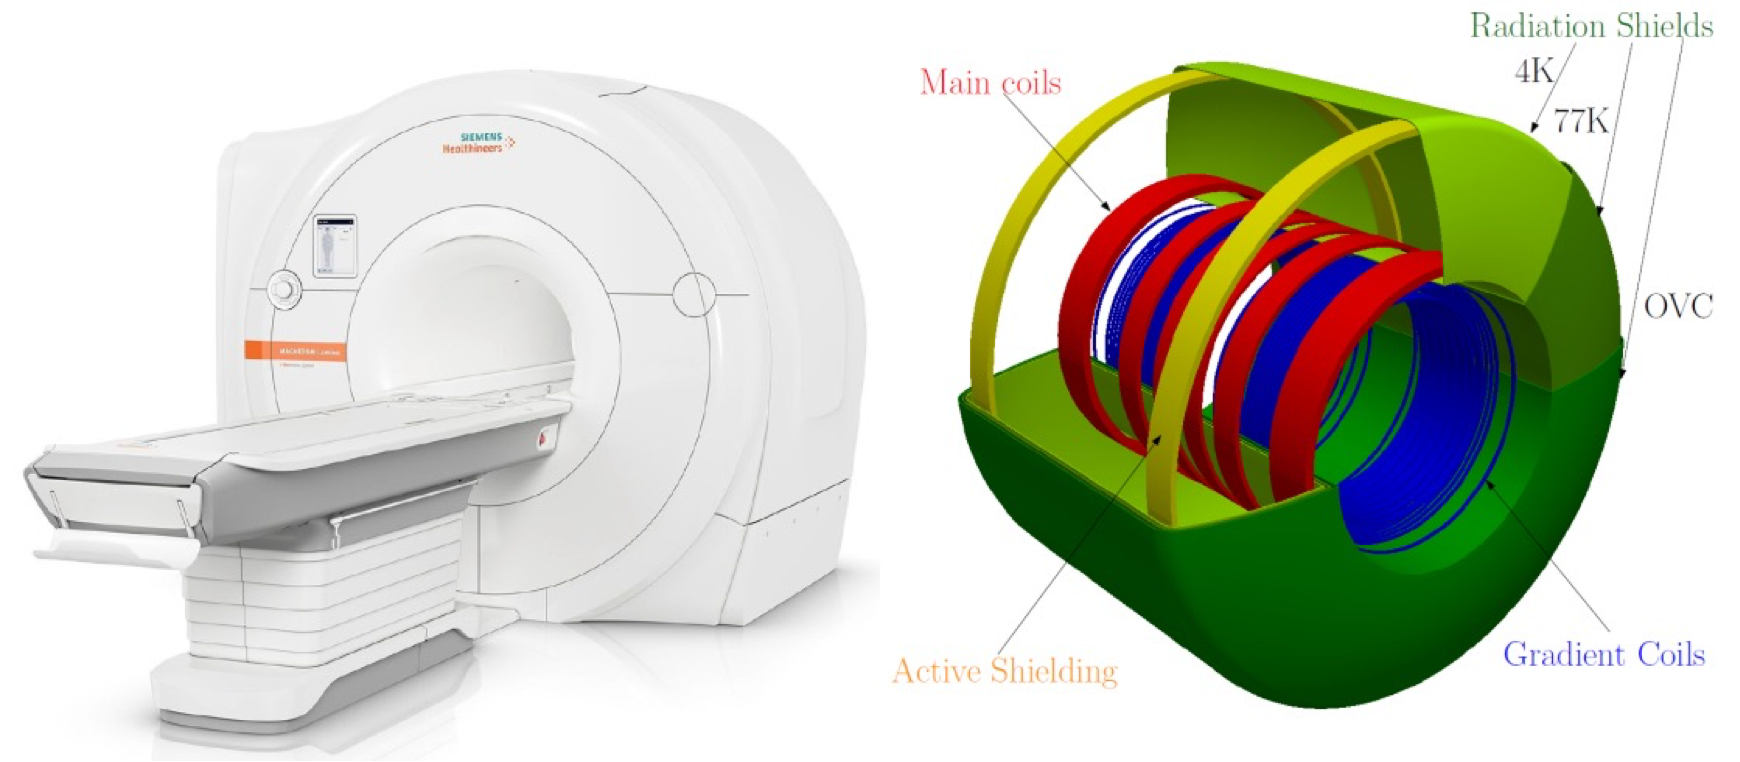 MRI main components